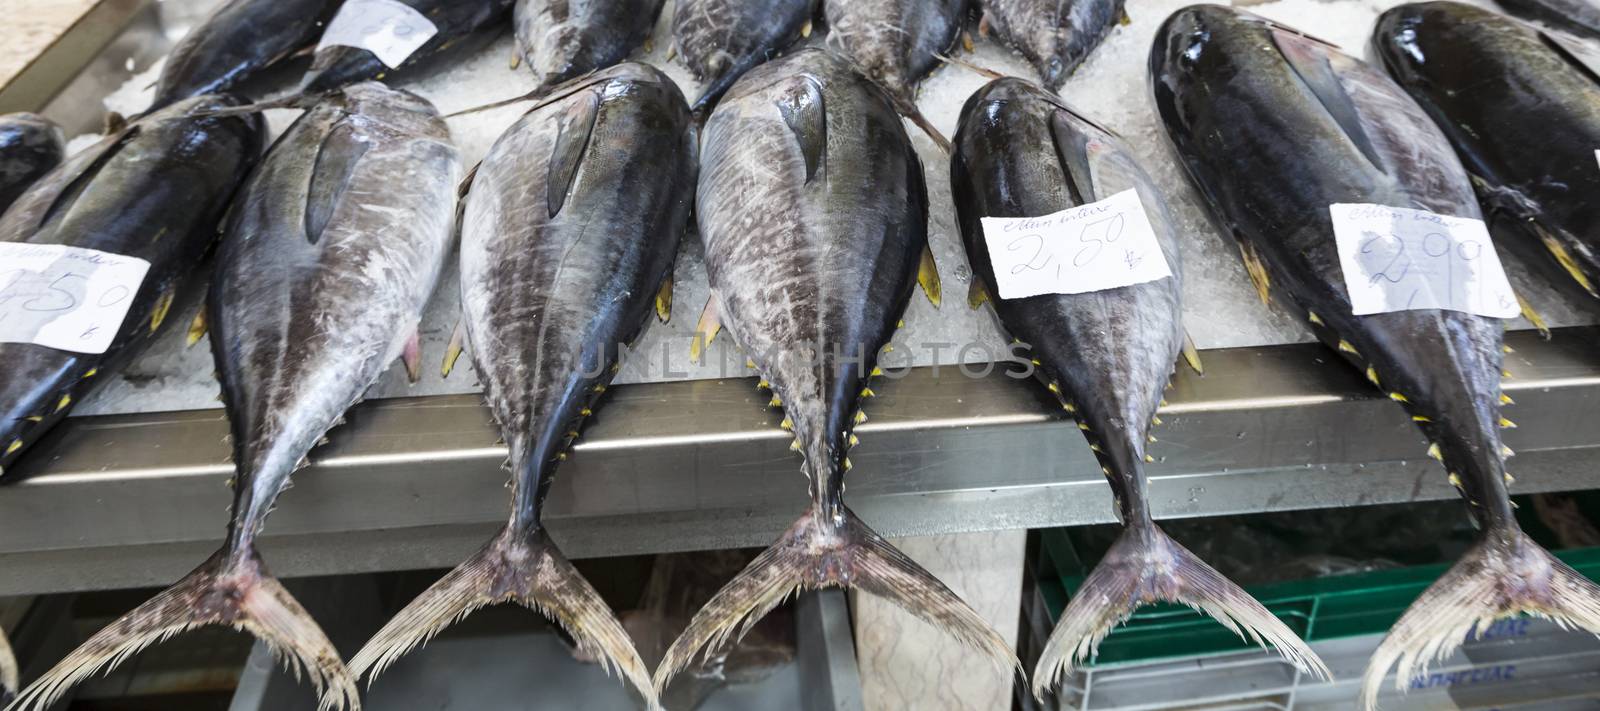 Fish market in Funchal, Madeira by mariusz_prusaczyk